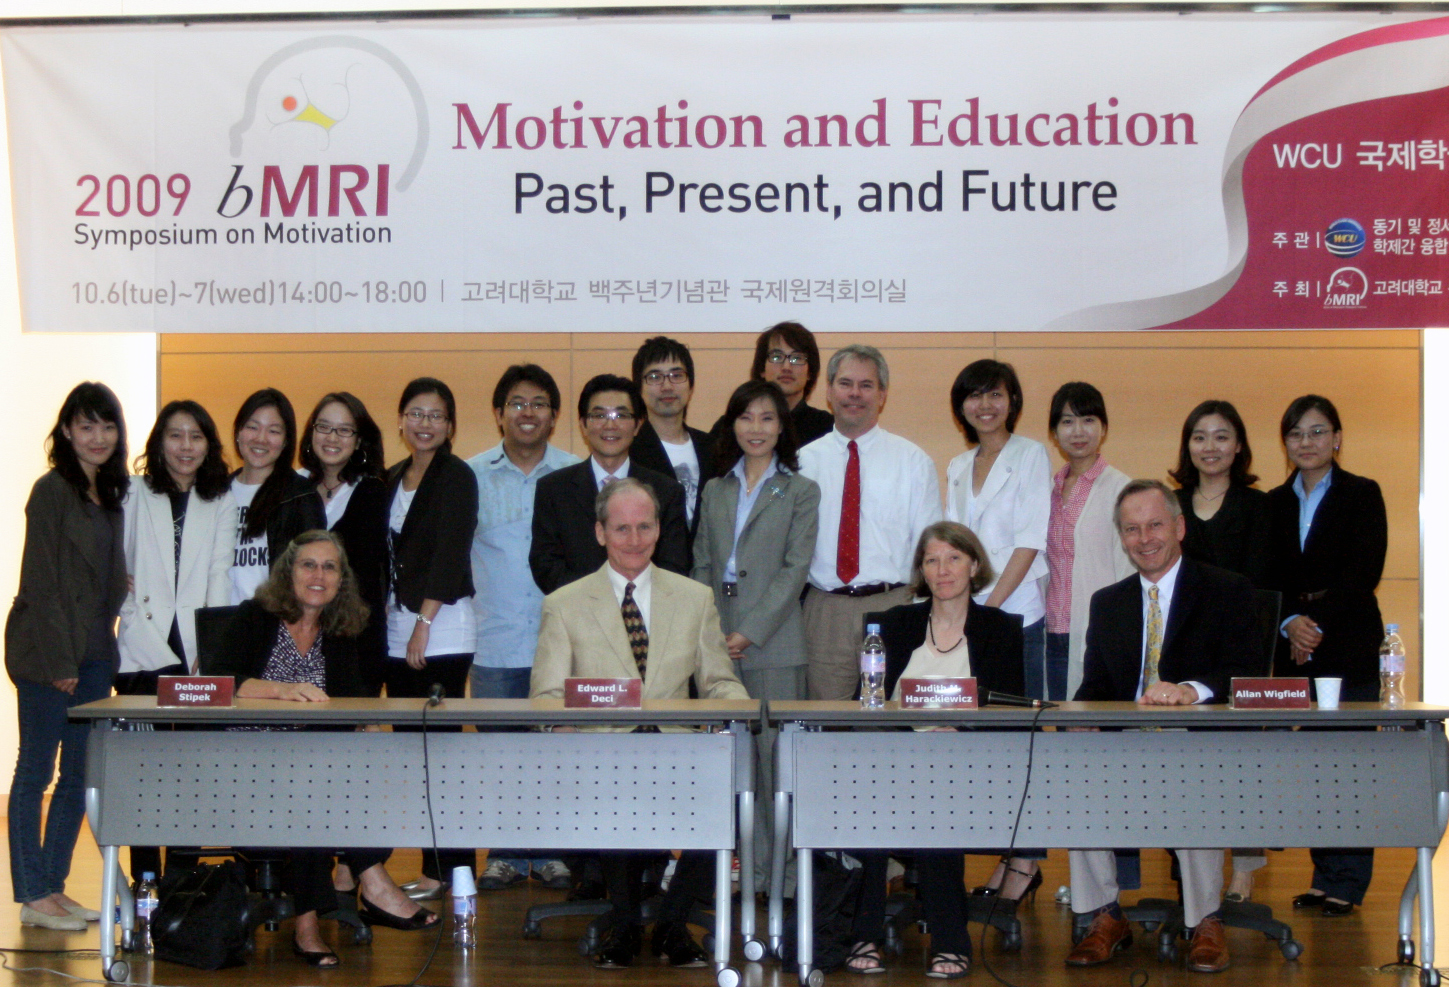 2009 bMRI Symposium on Motivation Day 2 #1